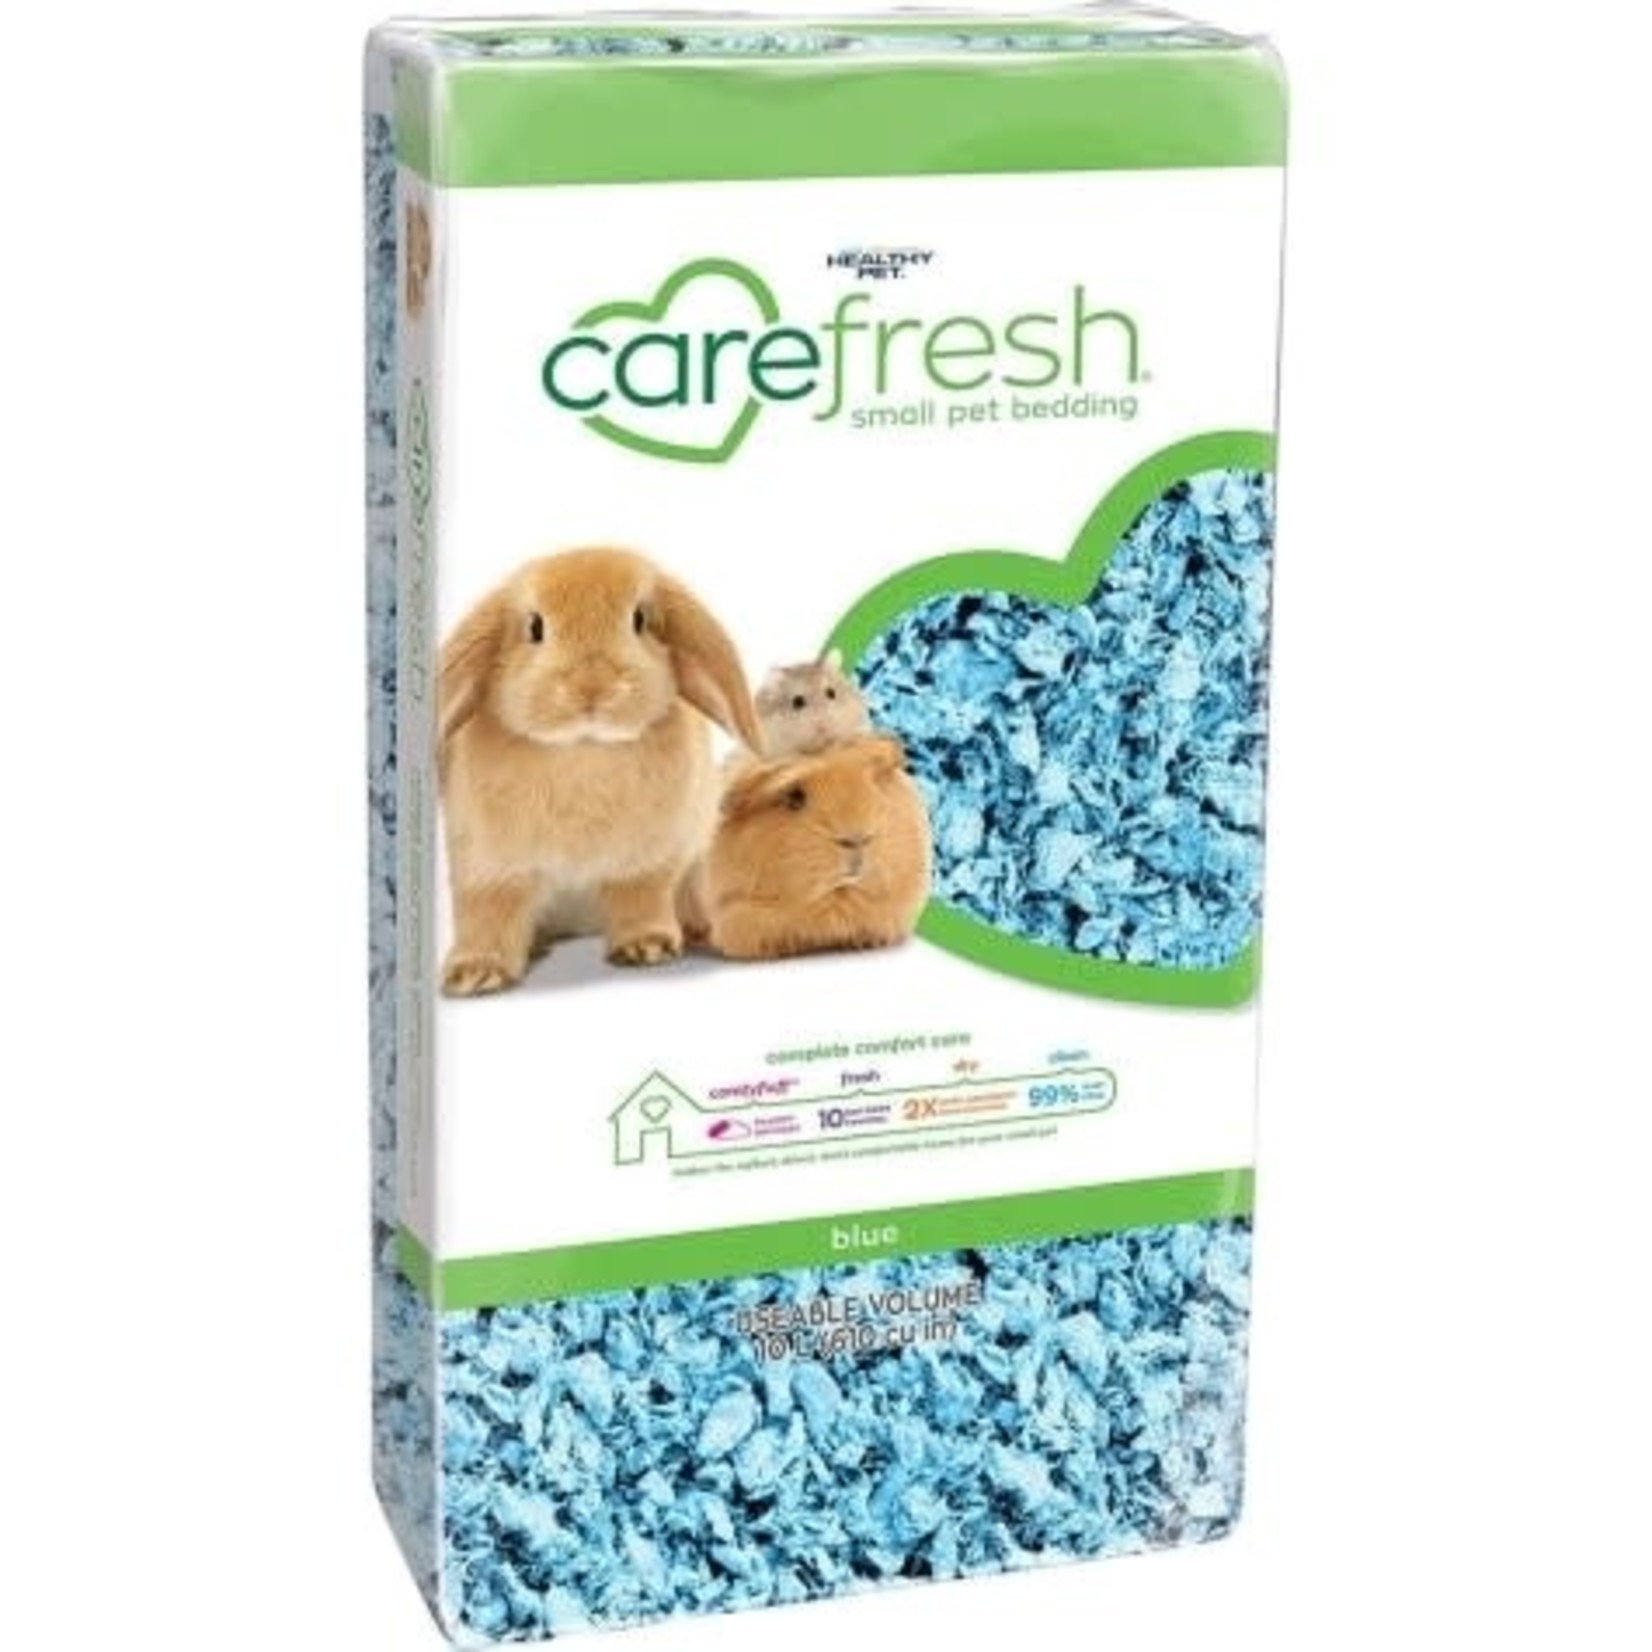 Carefresh Care Fresh Pet Bedding Blue 10L